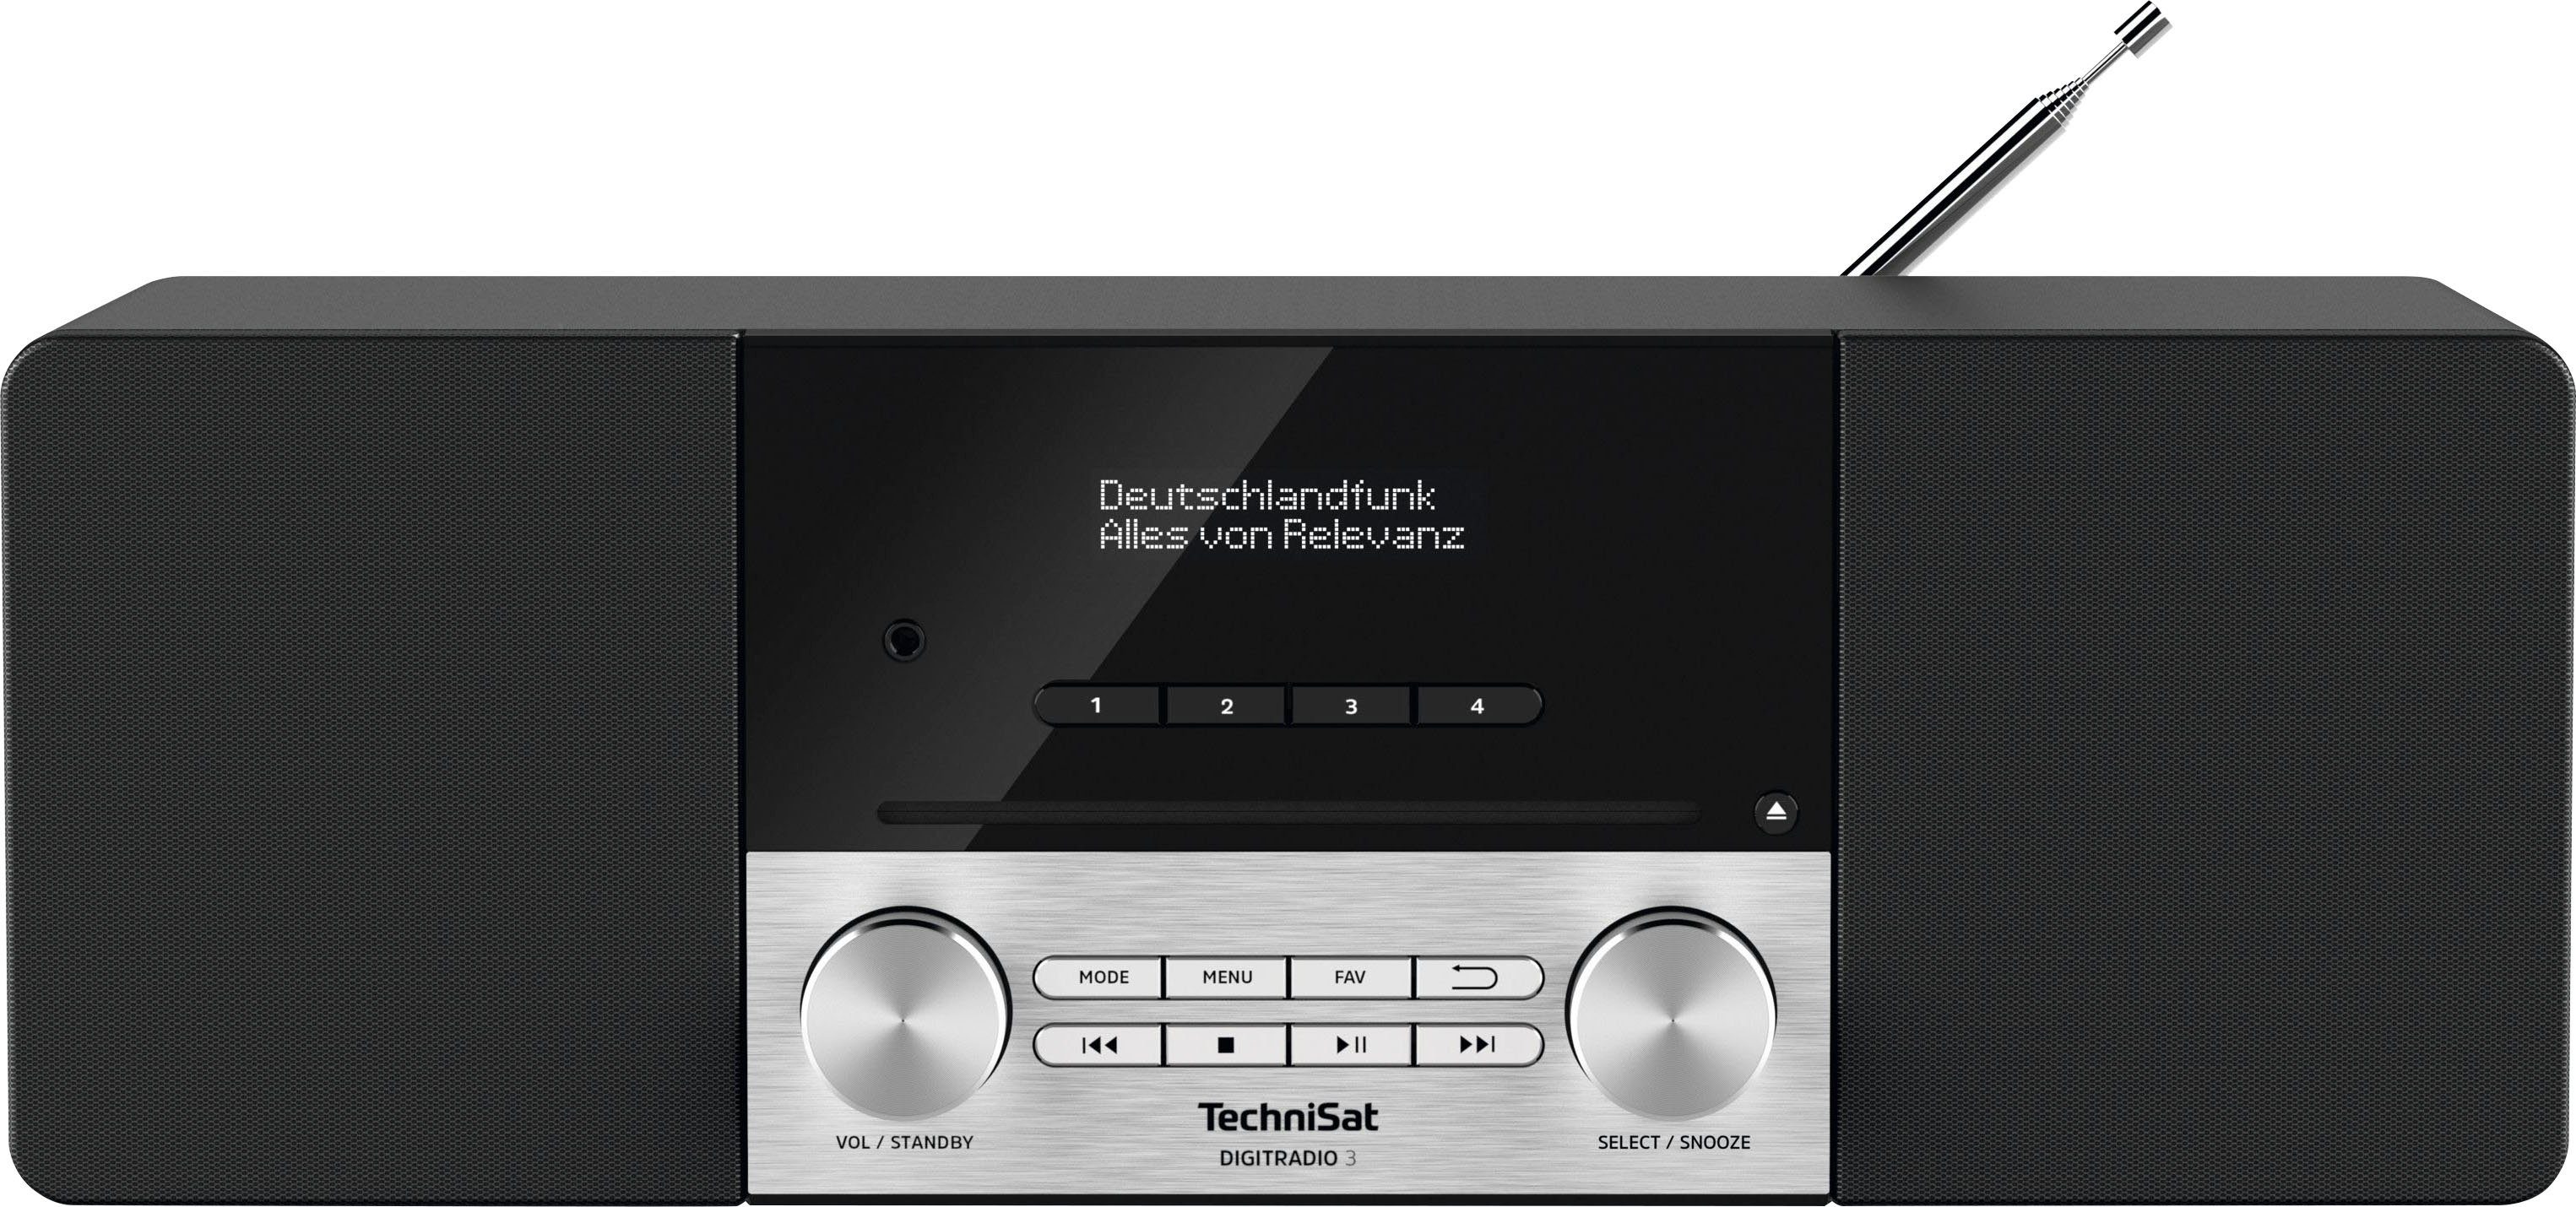 TechniSat DIGITRADIO (Digitalradio RDS, (DAB) (DAB), mit in W, 3 Germany) UKW Digitalradio Made 20 CD-Player, schwarz